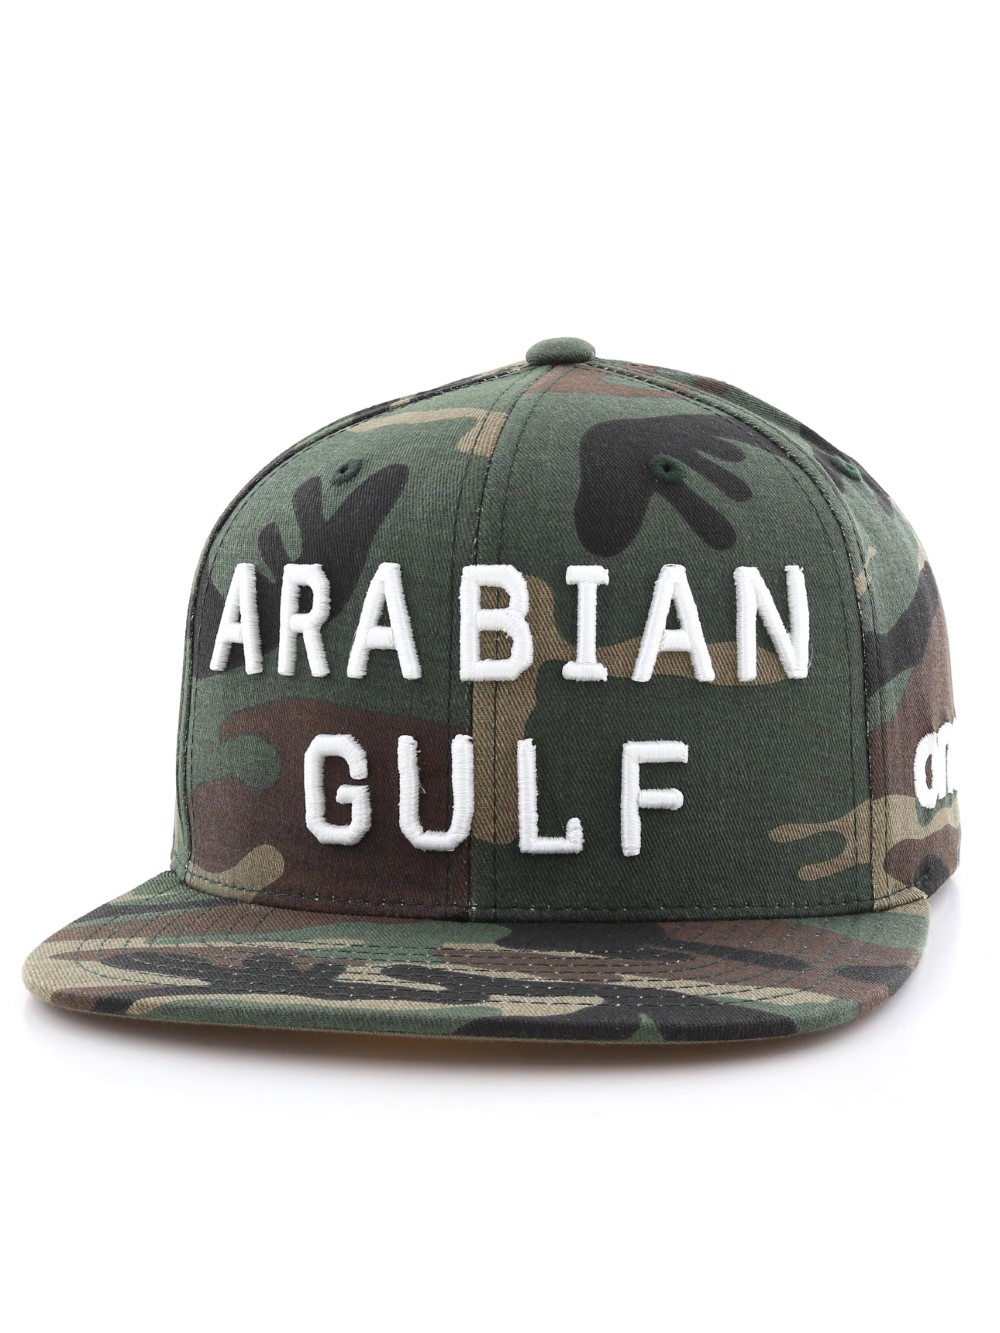 One8 Arabian Gulf English Flat Brim Snapback Unisex Caposfa